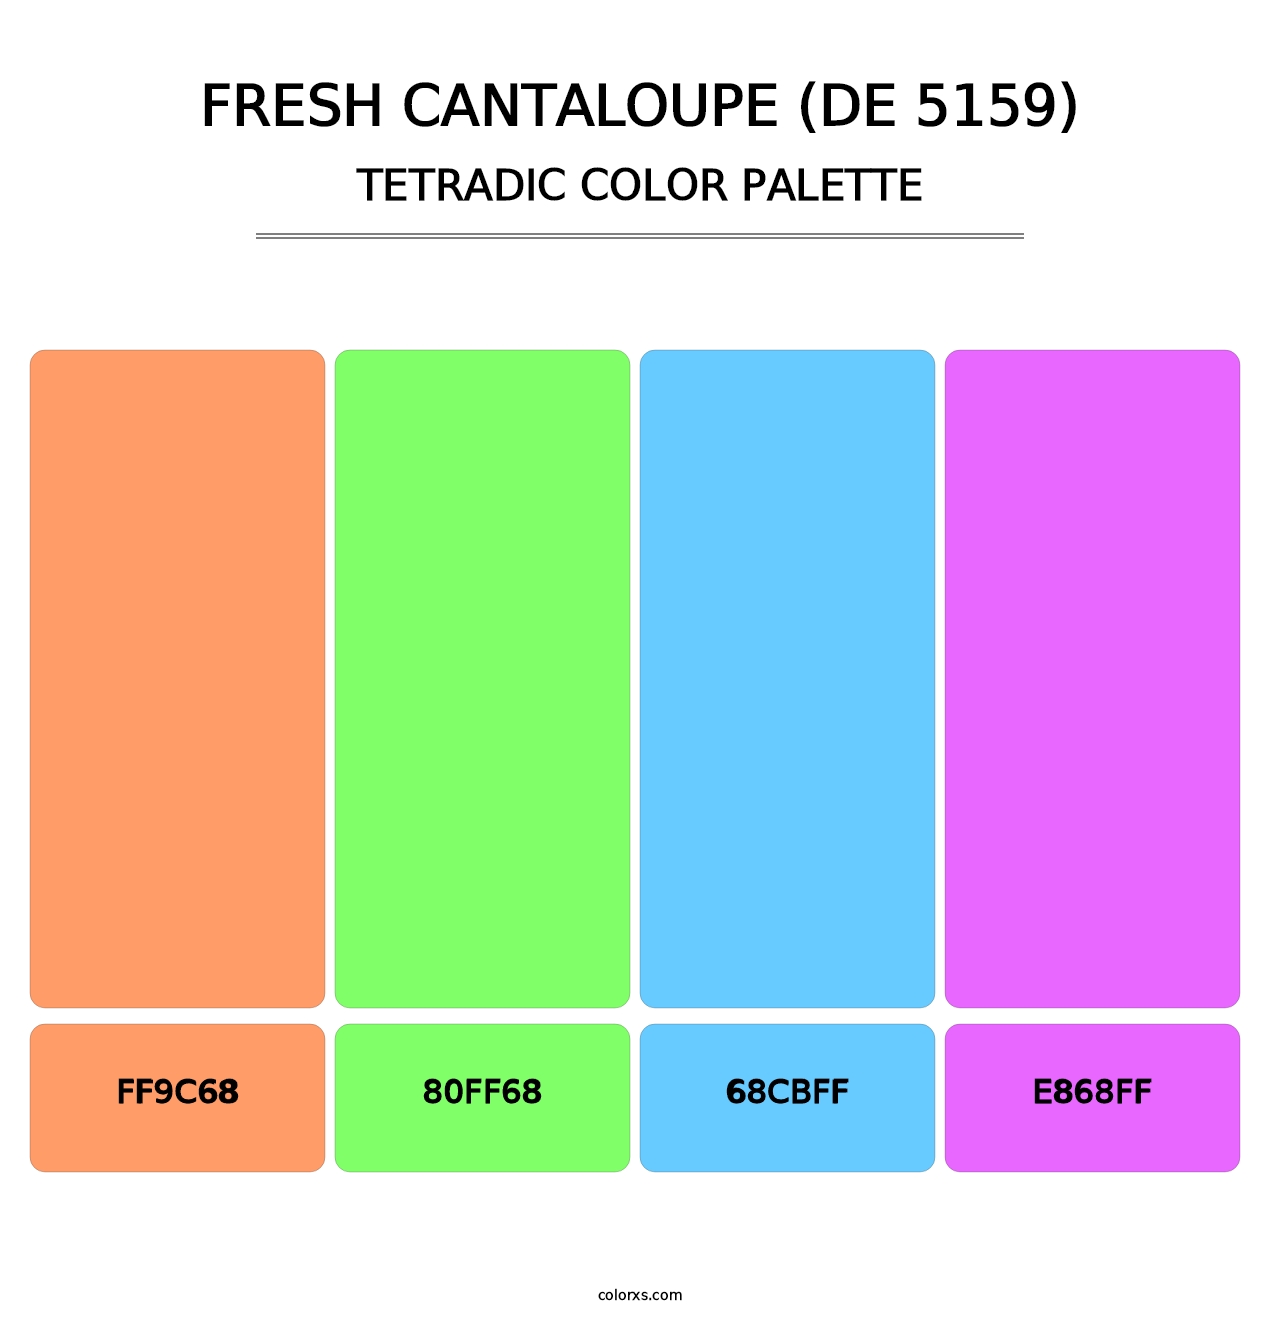 Fresh Cantaloupe (DE 5159) - Tetradic Color Palette